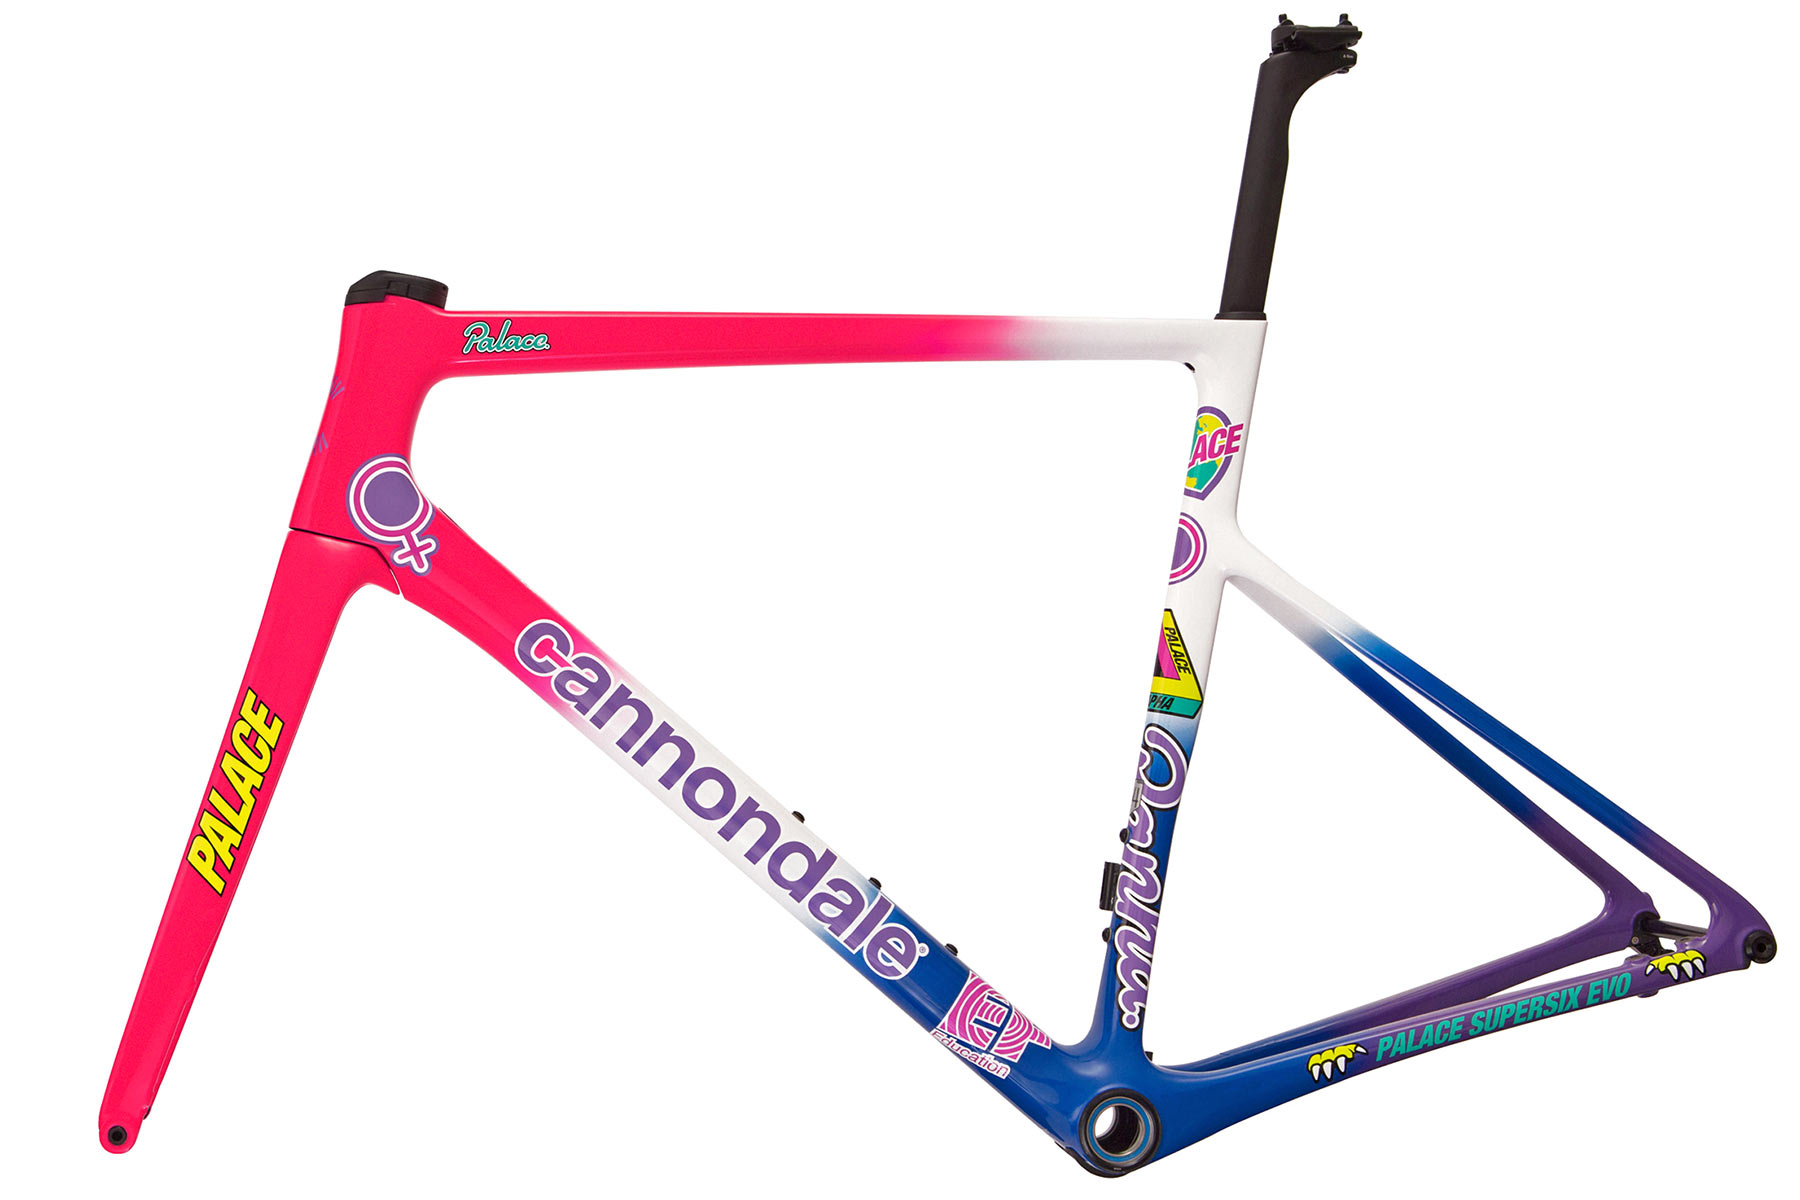 Cannondale-Rapha-X-Palace Tour de France Femmes custom race bikes, SuperSix Evo frameset